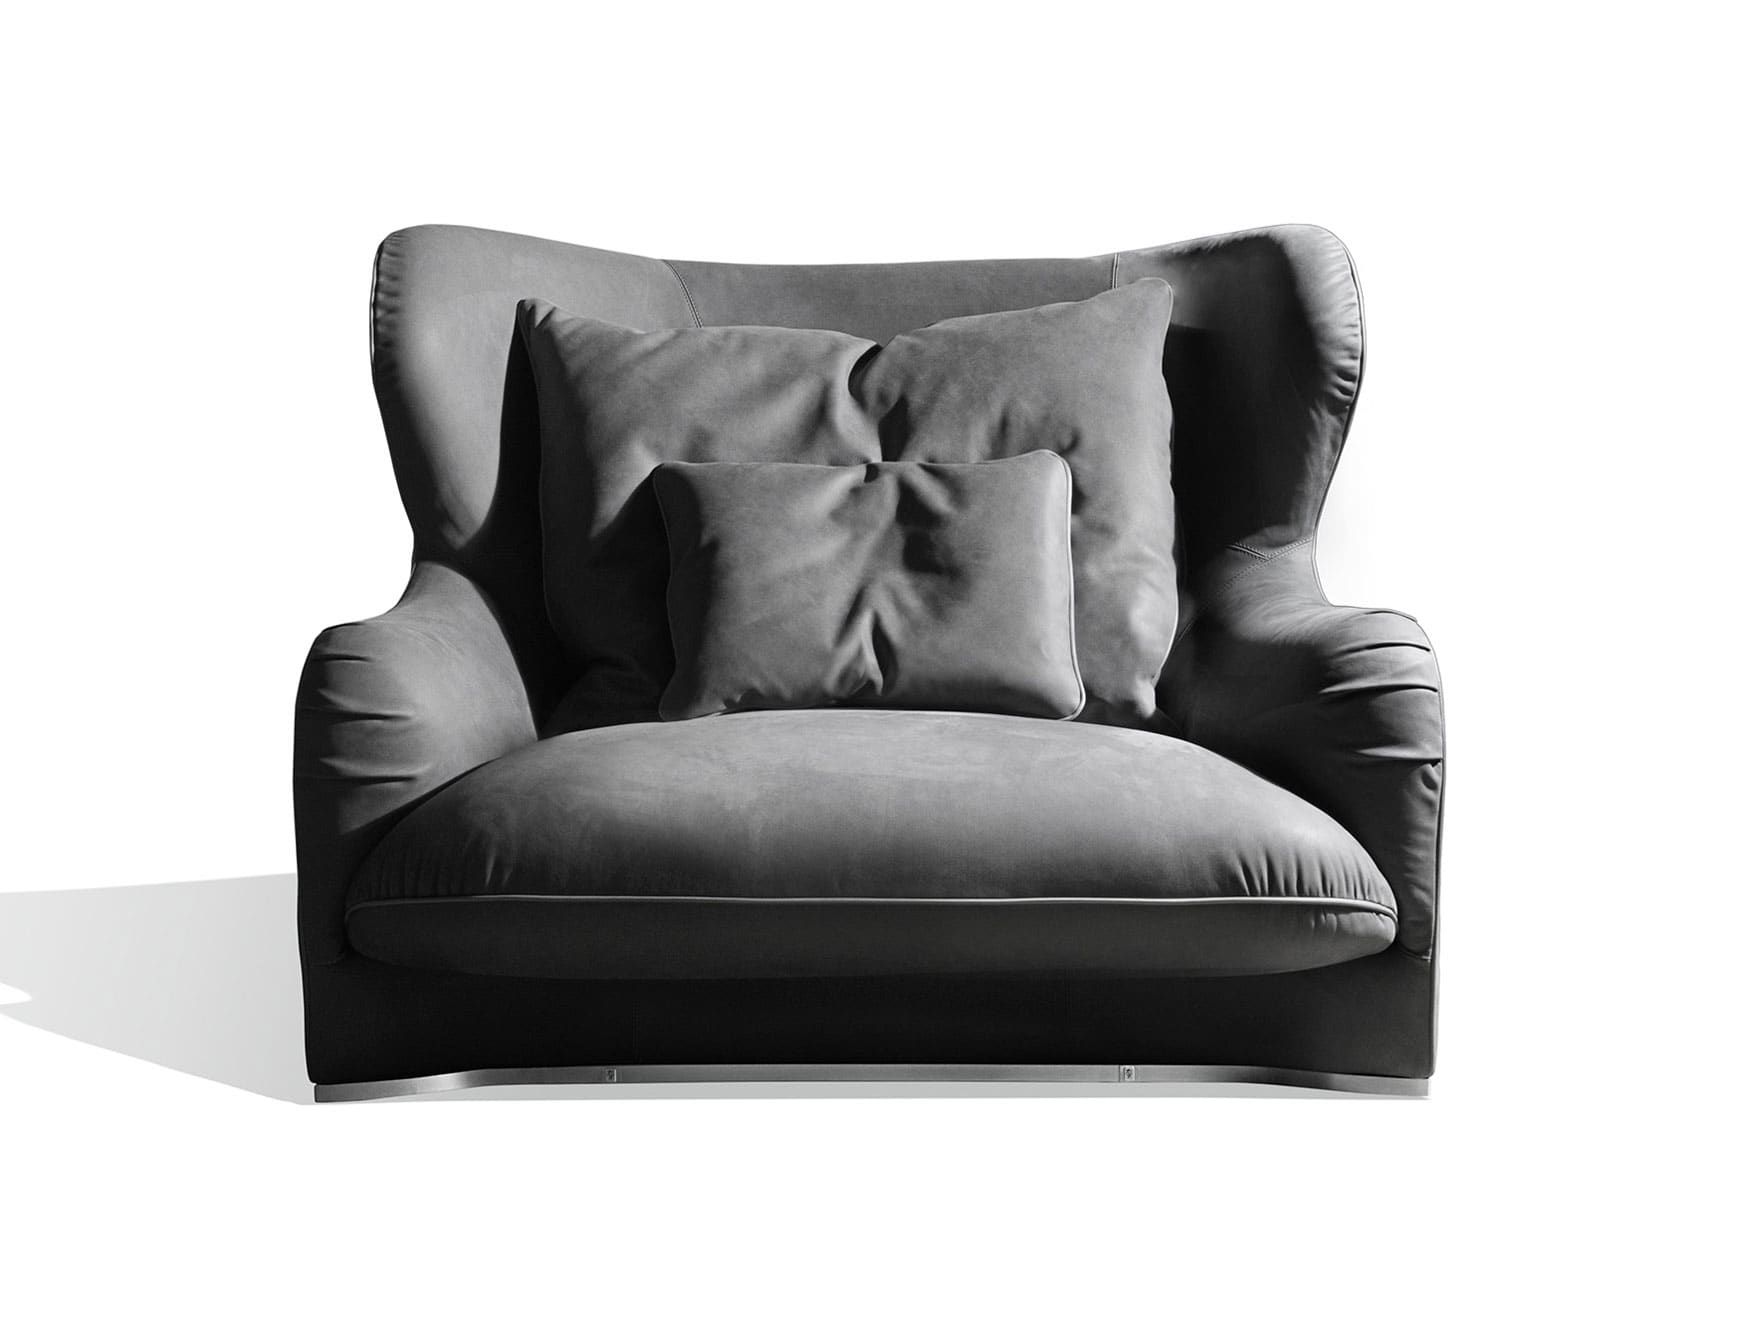 Balance modern luxury sofa chair with grey fabric